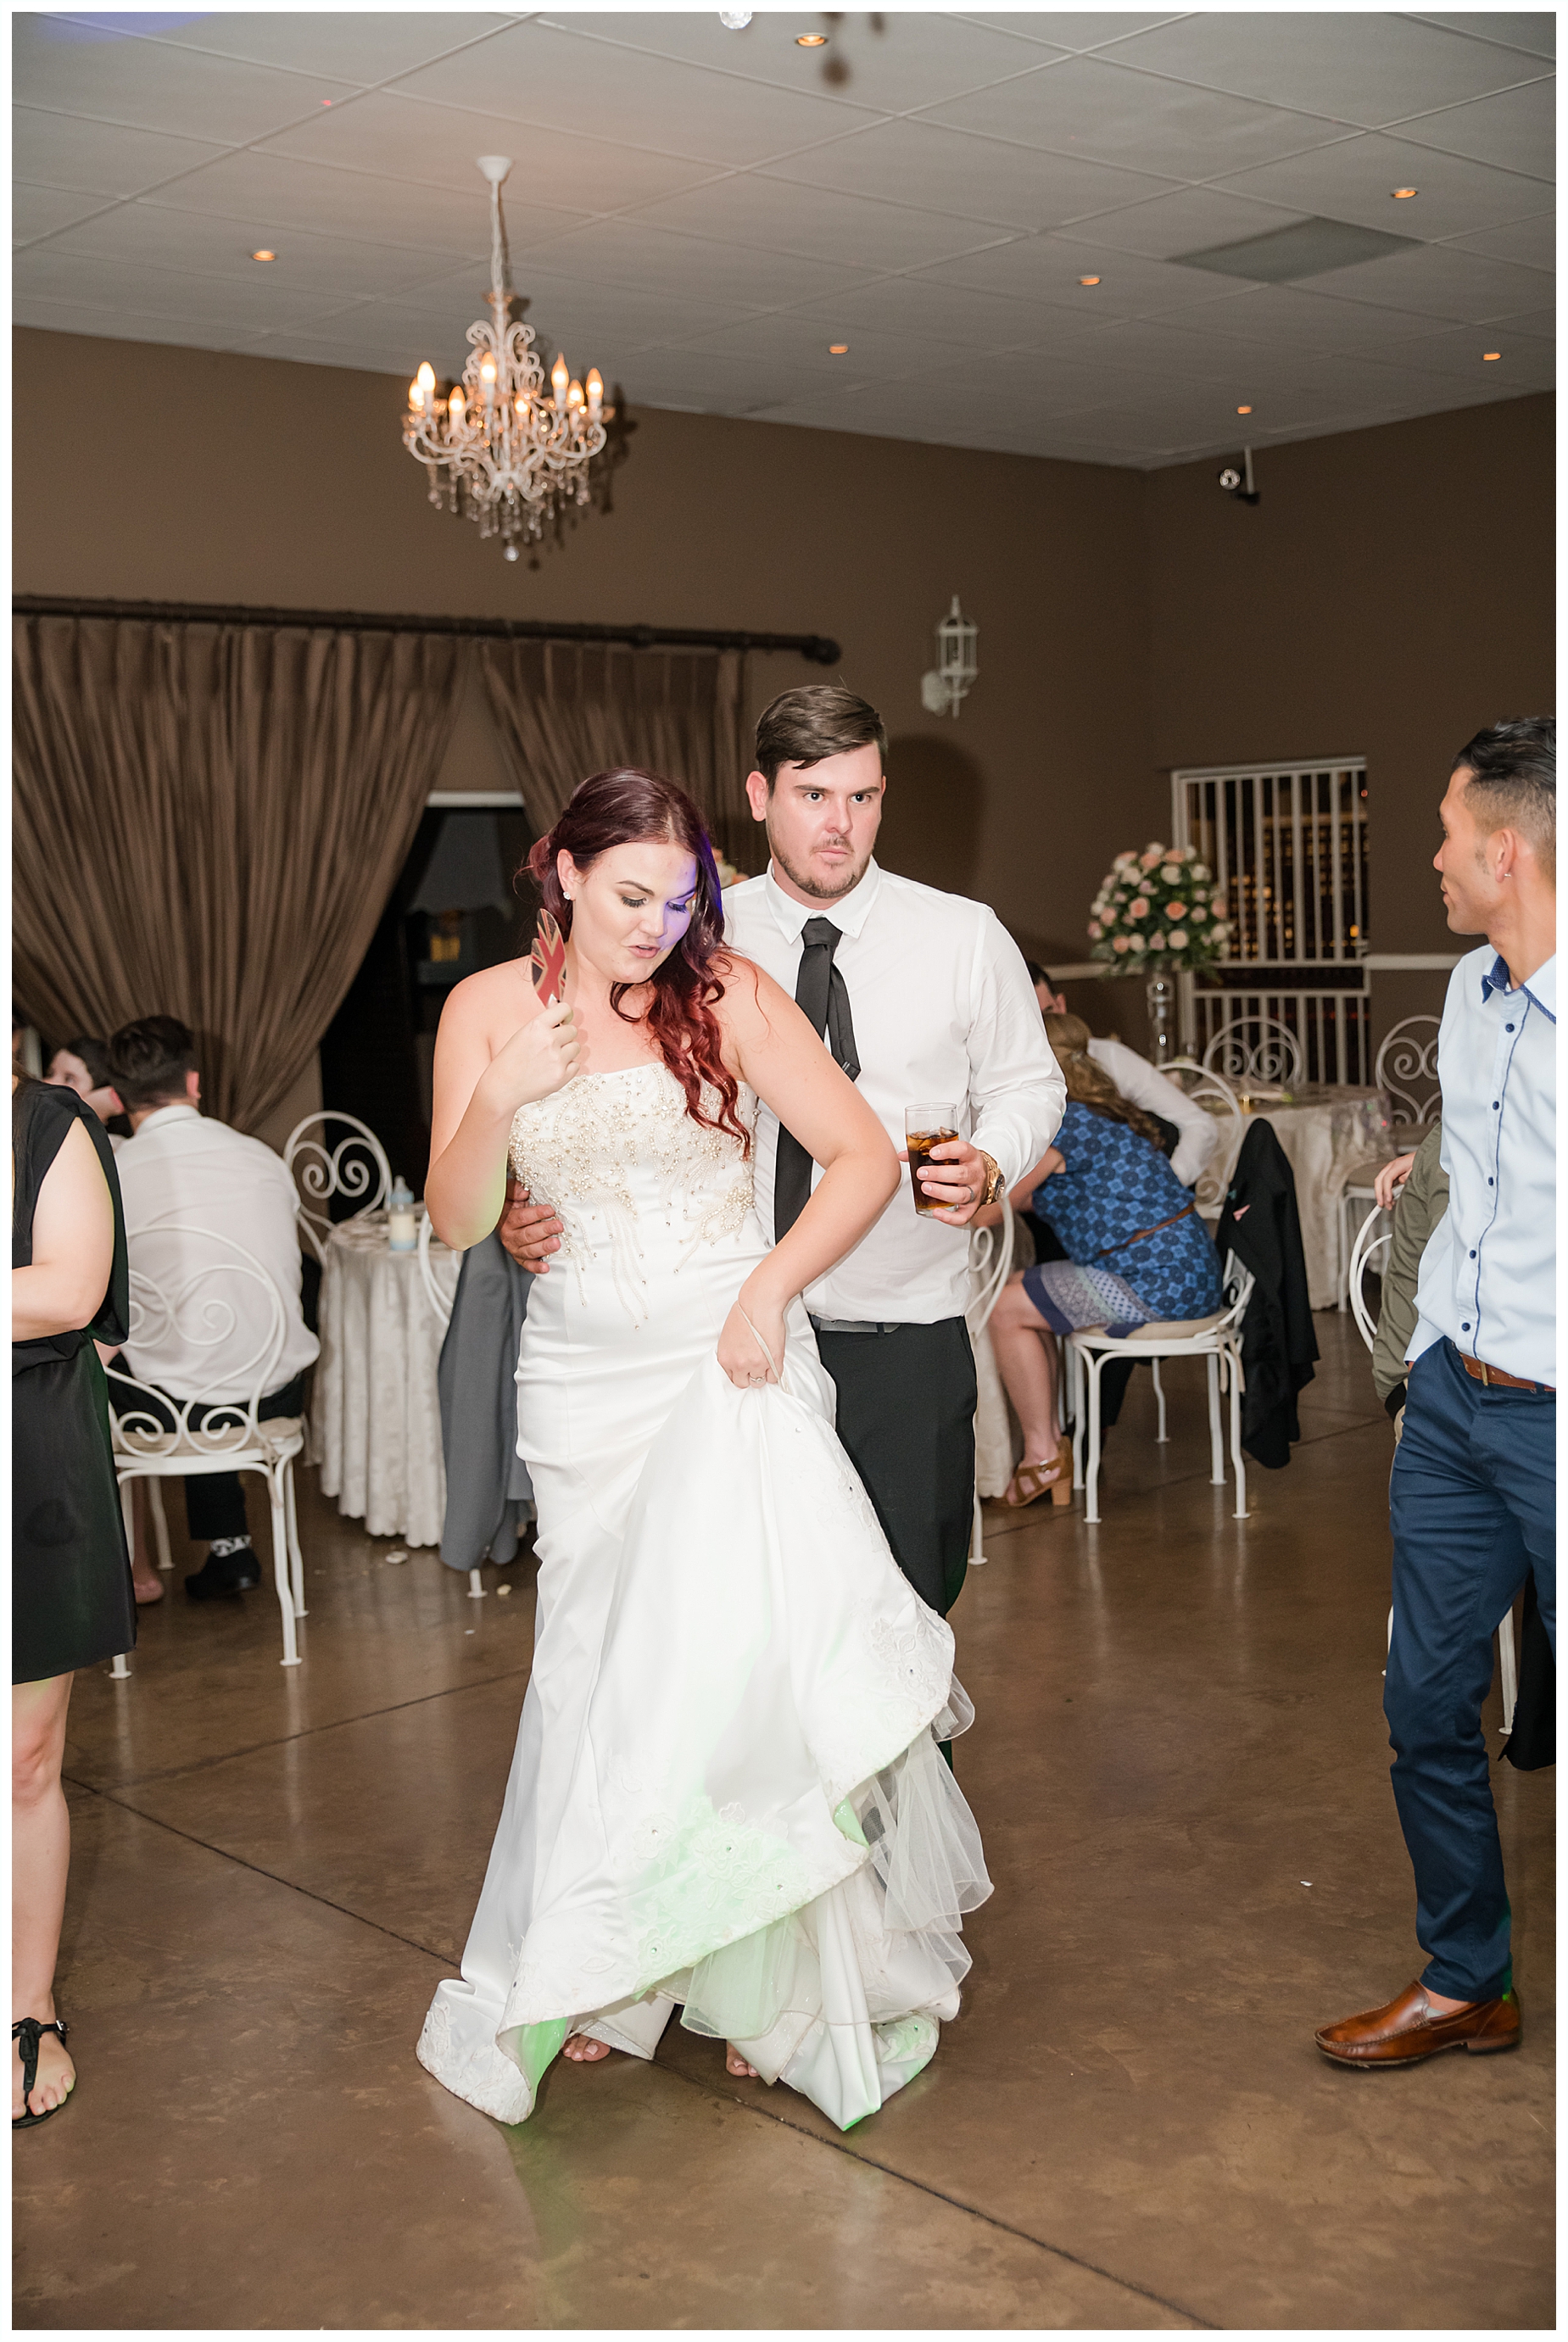 Matthew and Tegan Wedding party dancing